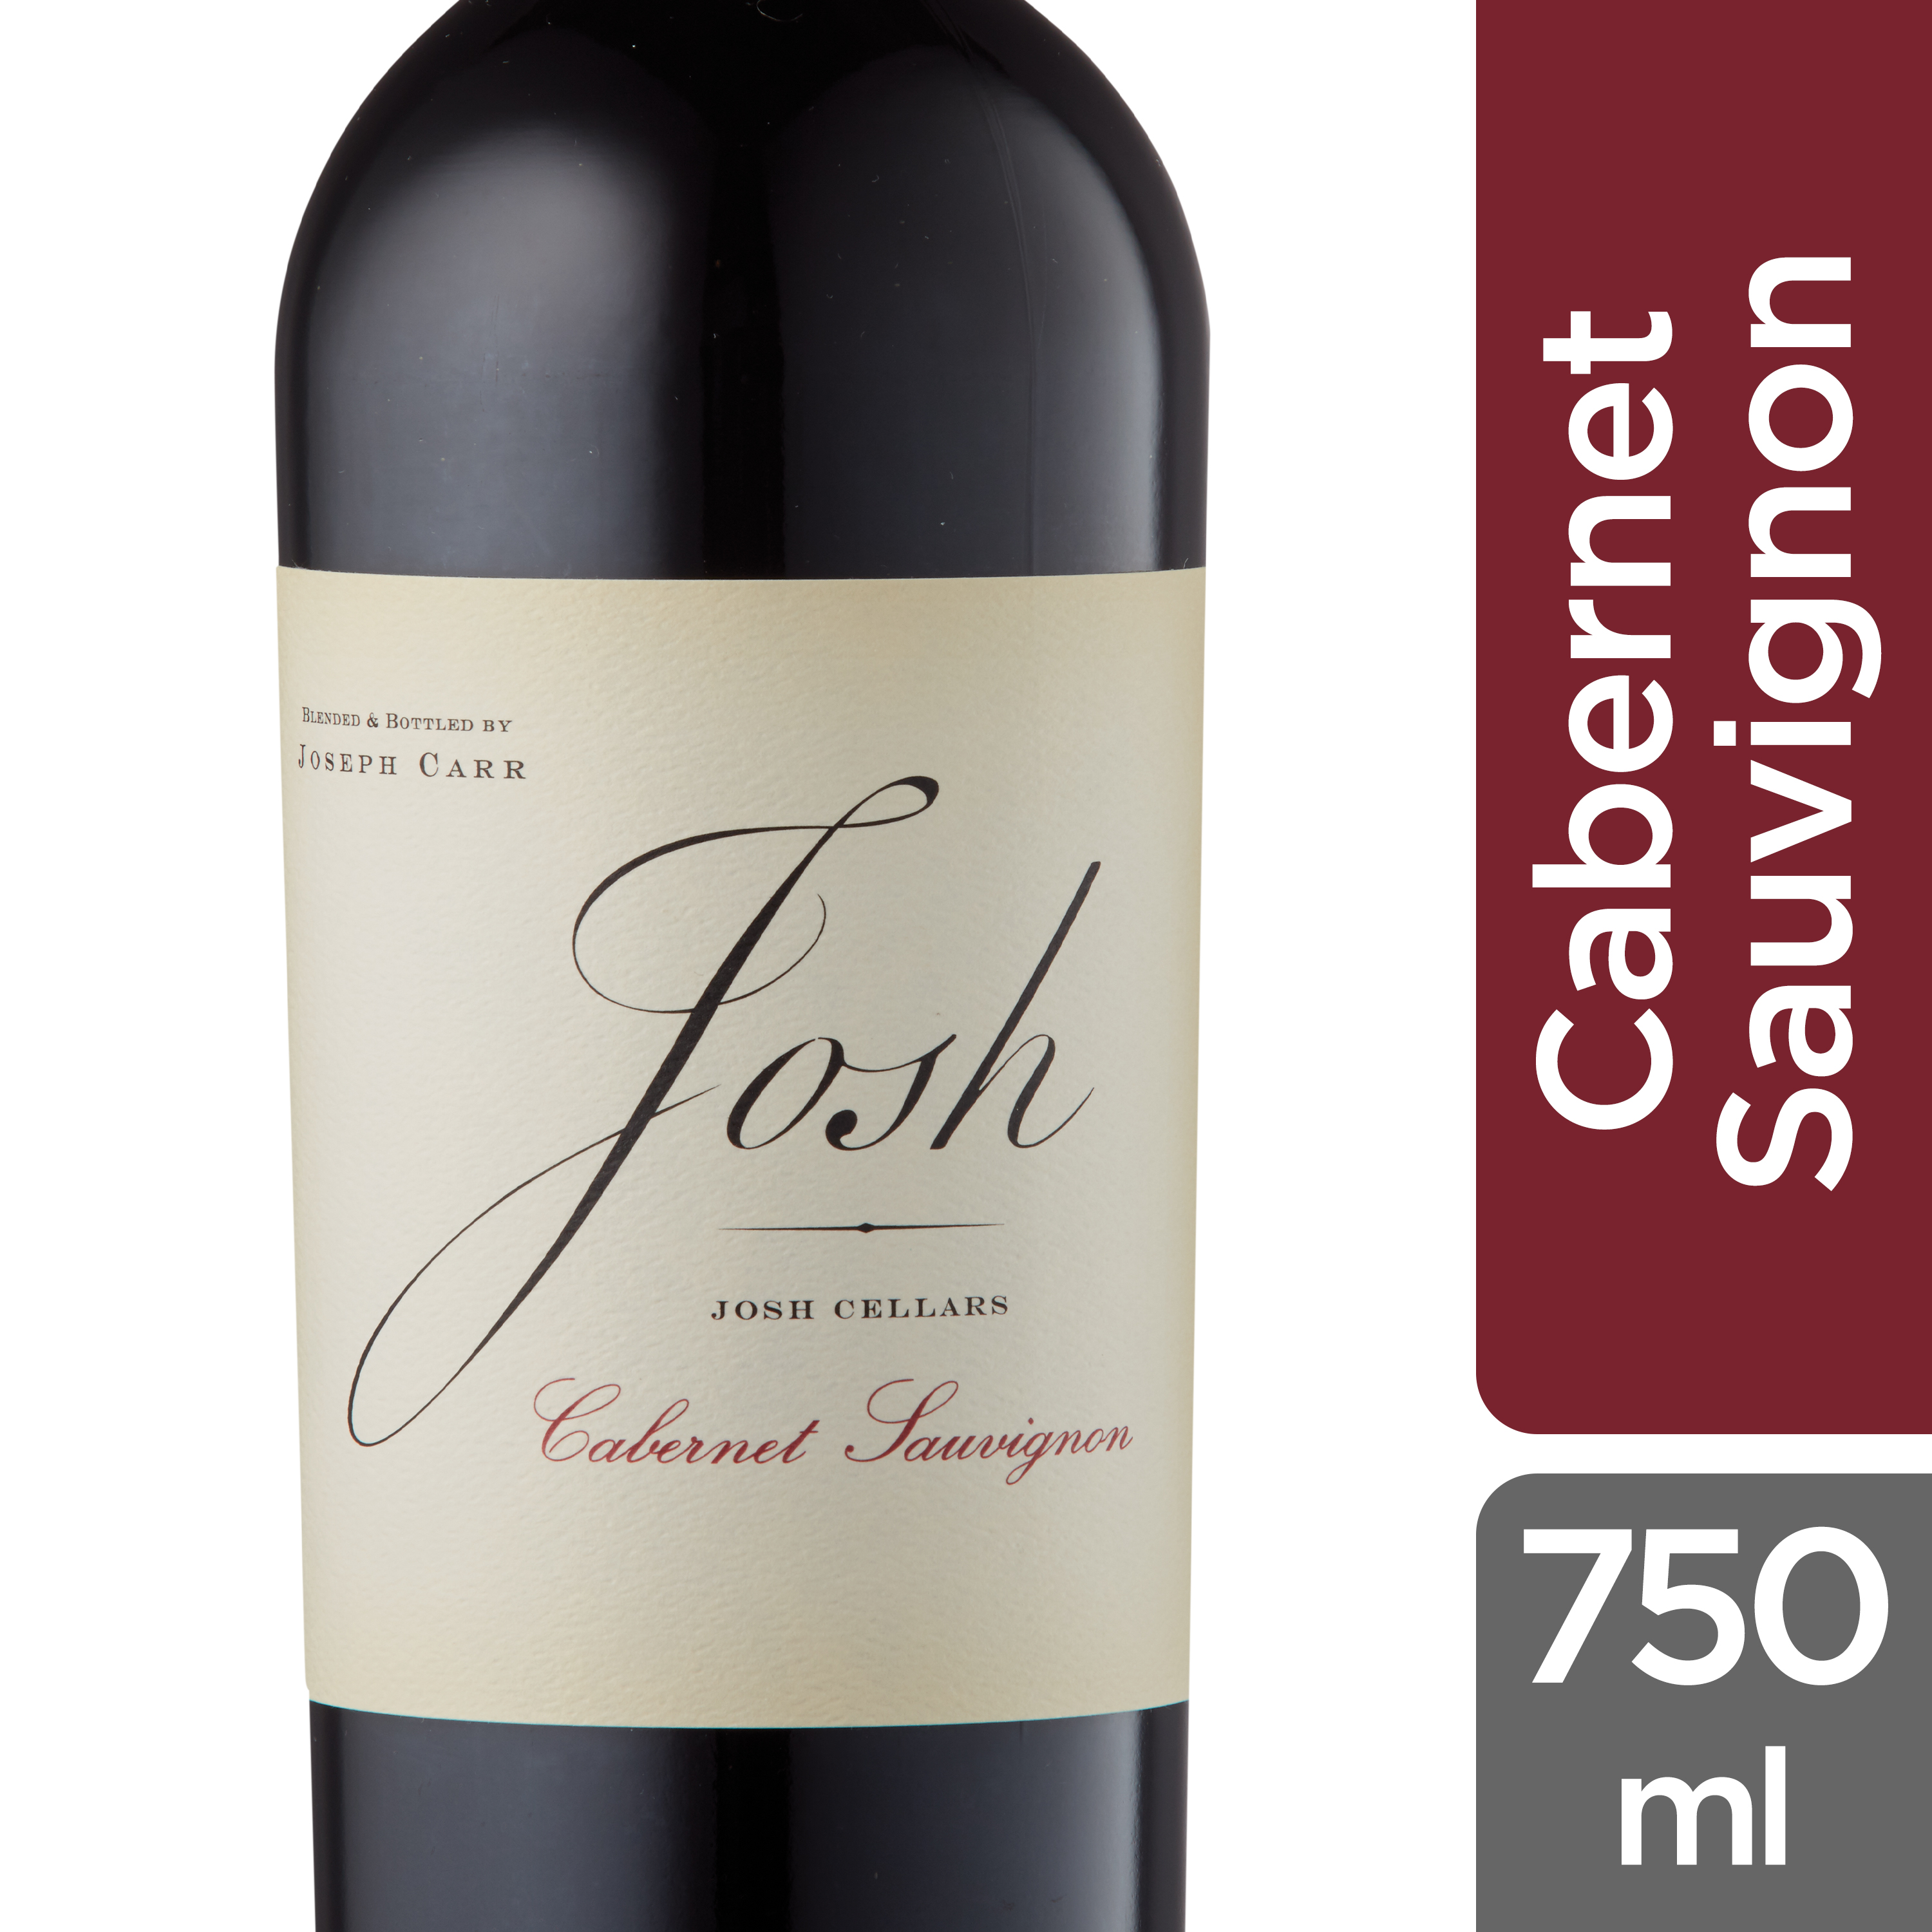 Josh Cellars Cabernet Sauvignon California Red Wine, 750 ml Bottle, 14% ABV - image 1 of 10